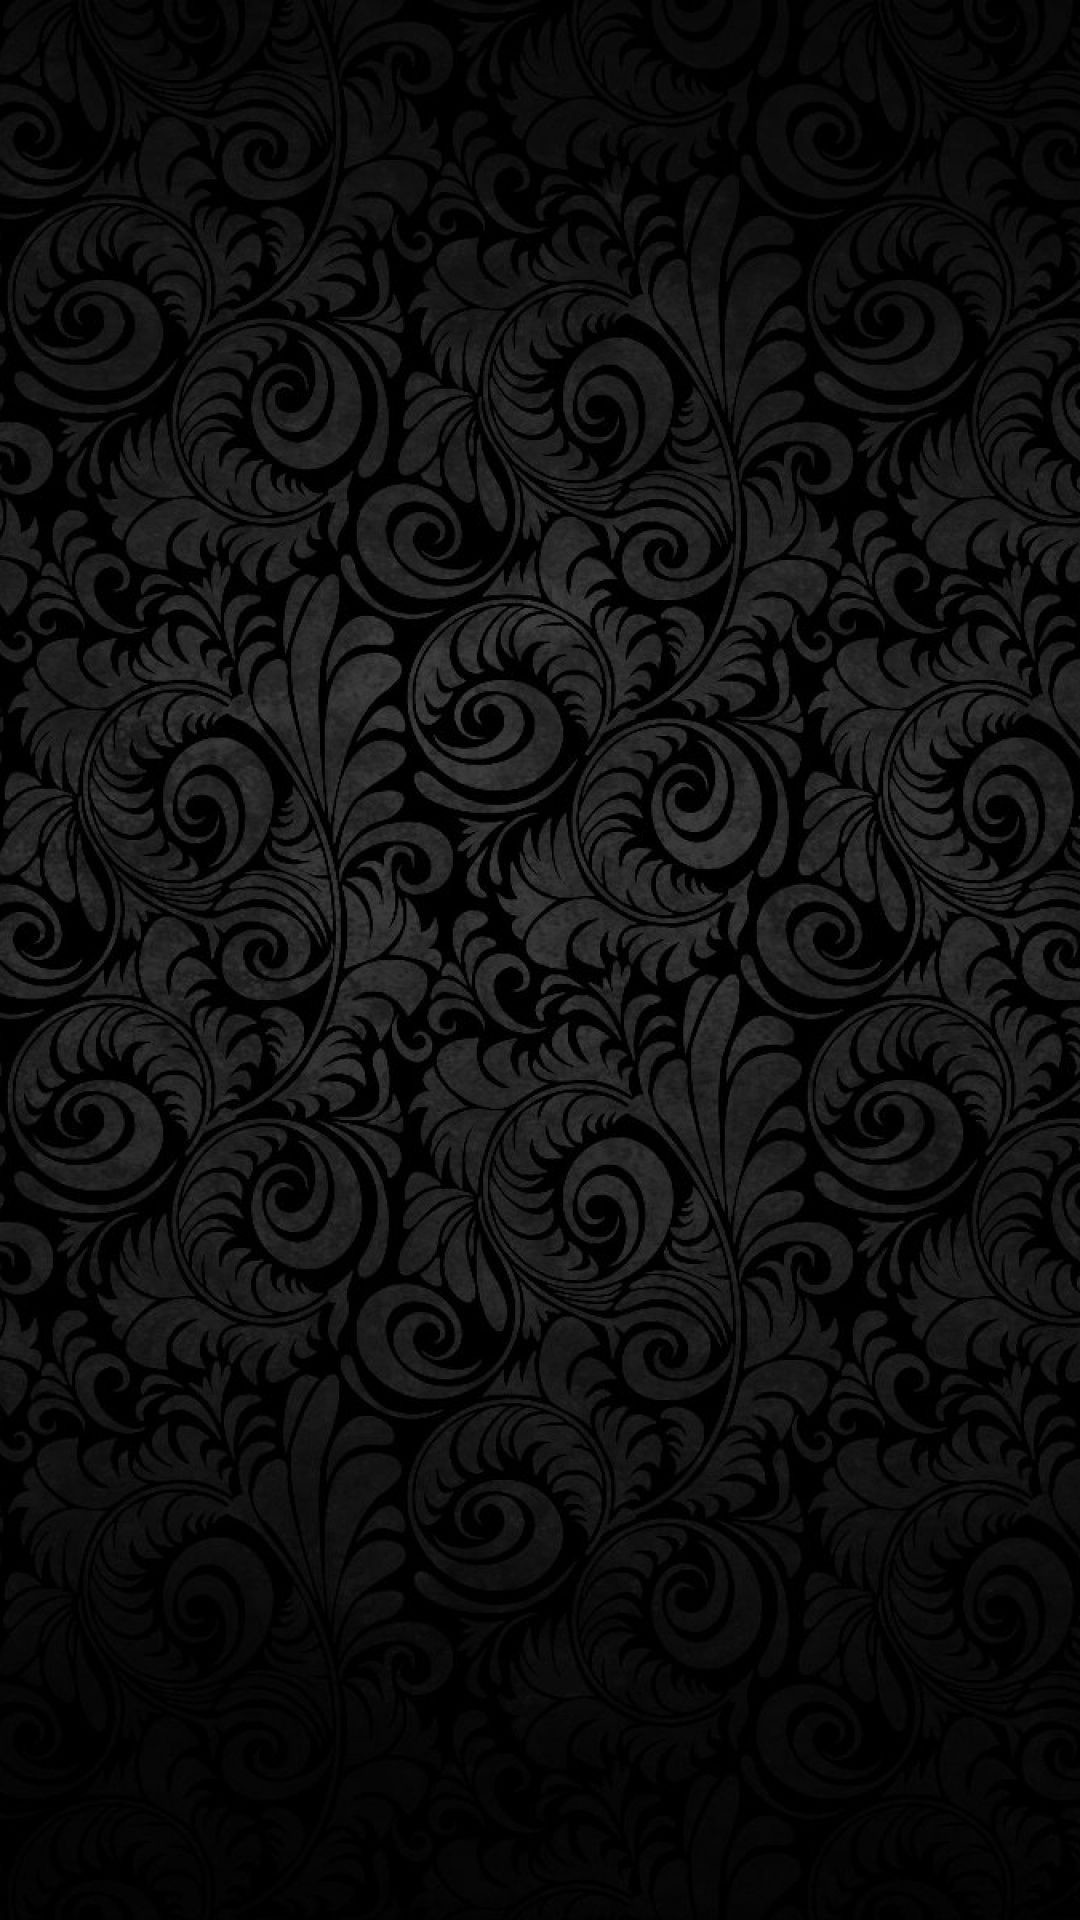 1080x1920, Iphone 6 Plus Wallpaper Dark Pattern 07 - Iphone 6 Wallpaper Black - HD Wallpaper 